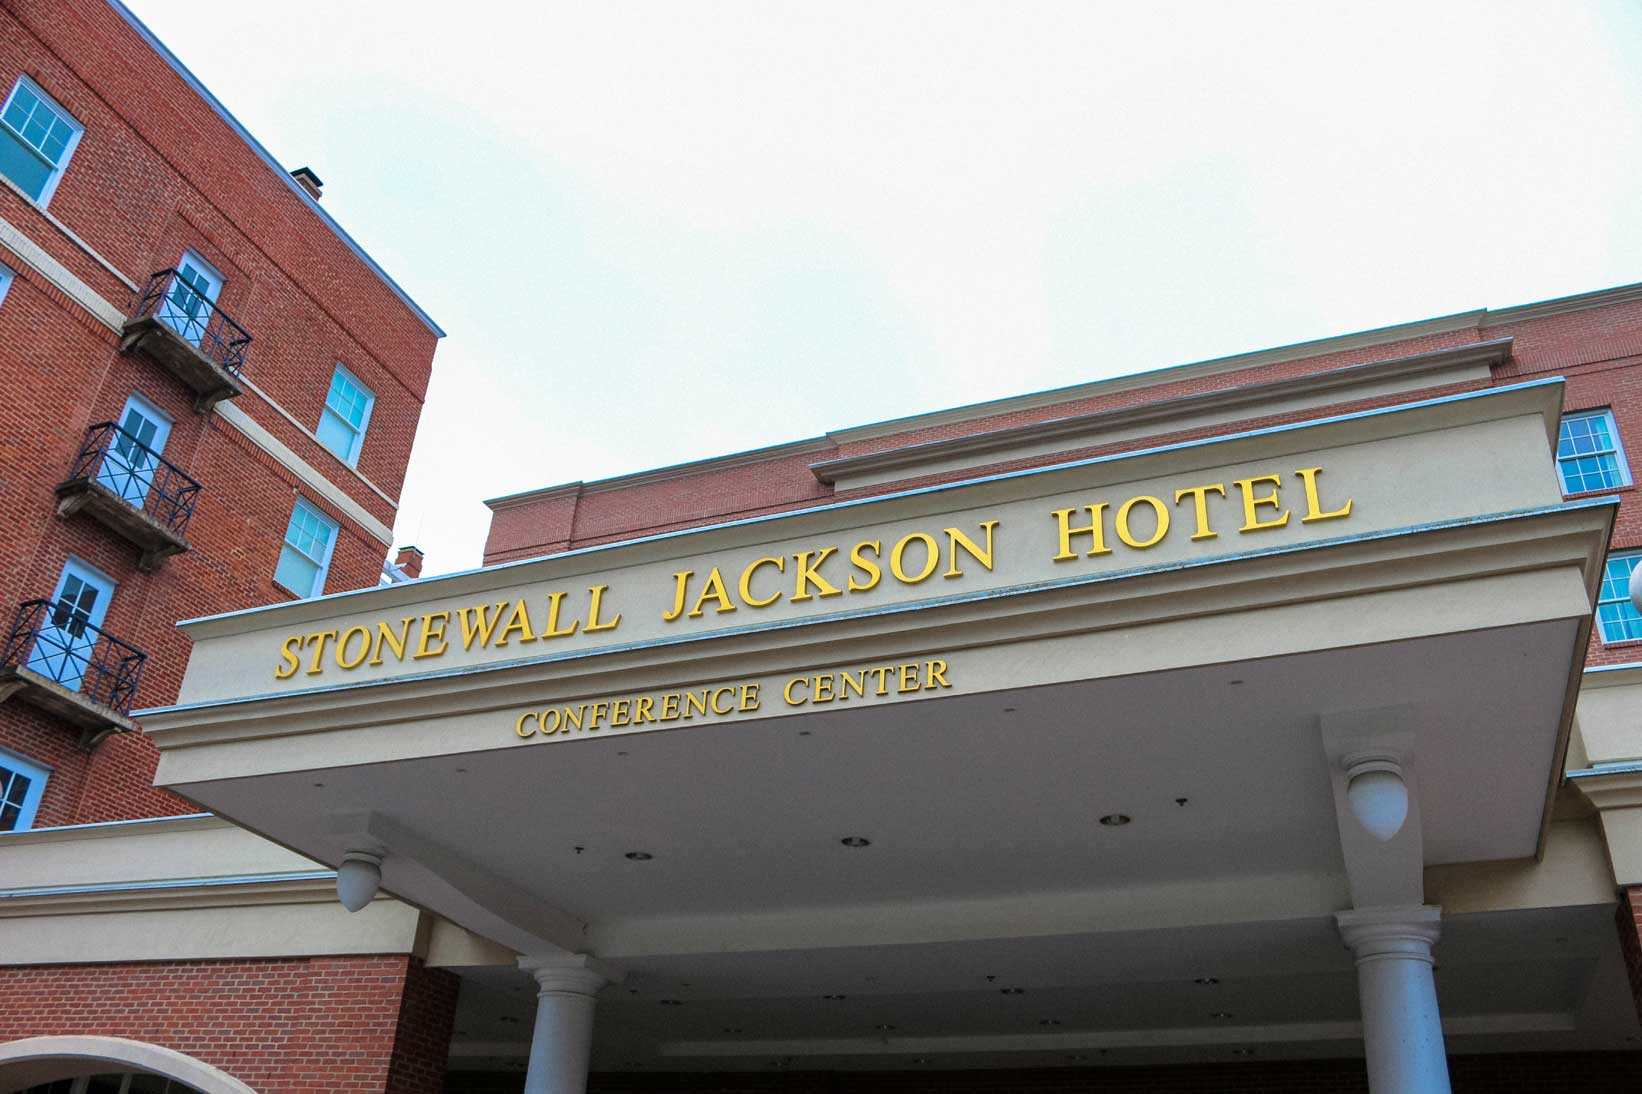 Stonewall Jackson Hotel in Staunton, VA